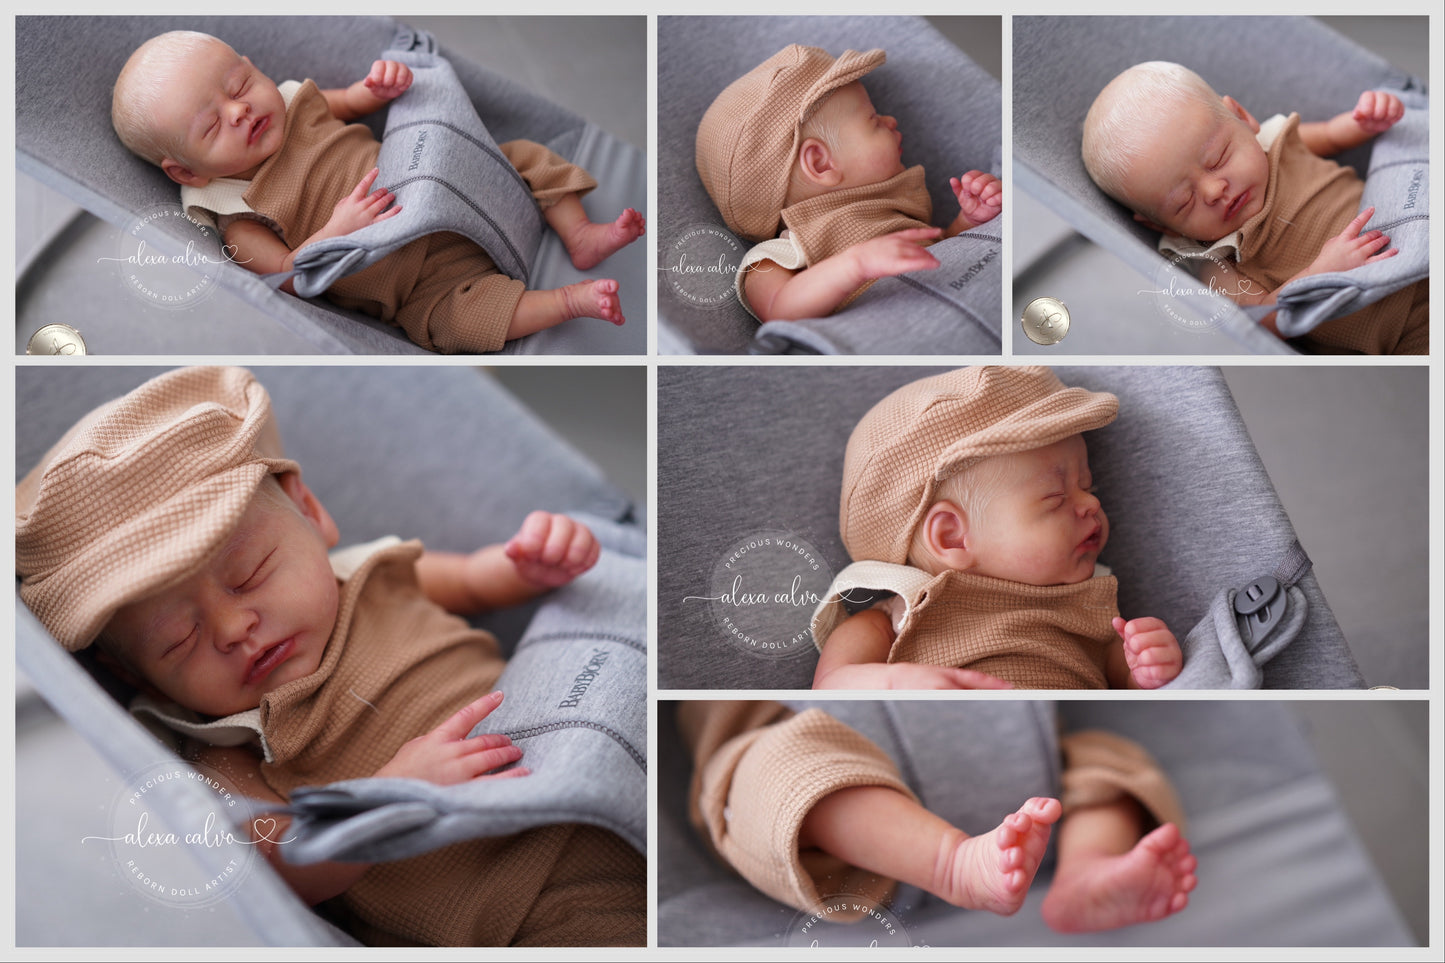 Baby Jona  - Prototype by Melanie Gebhardt, Reborn by Alexa Calvo